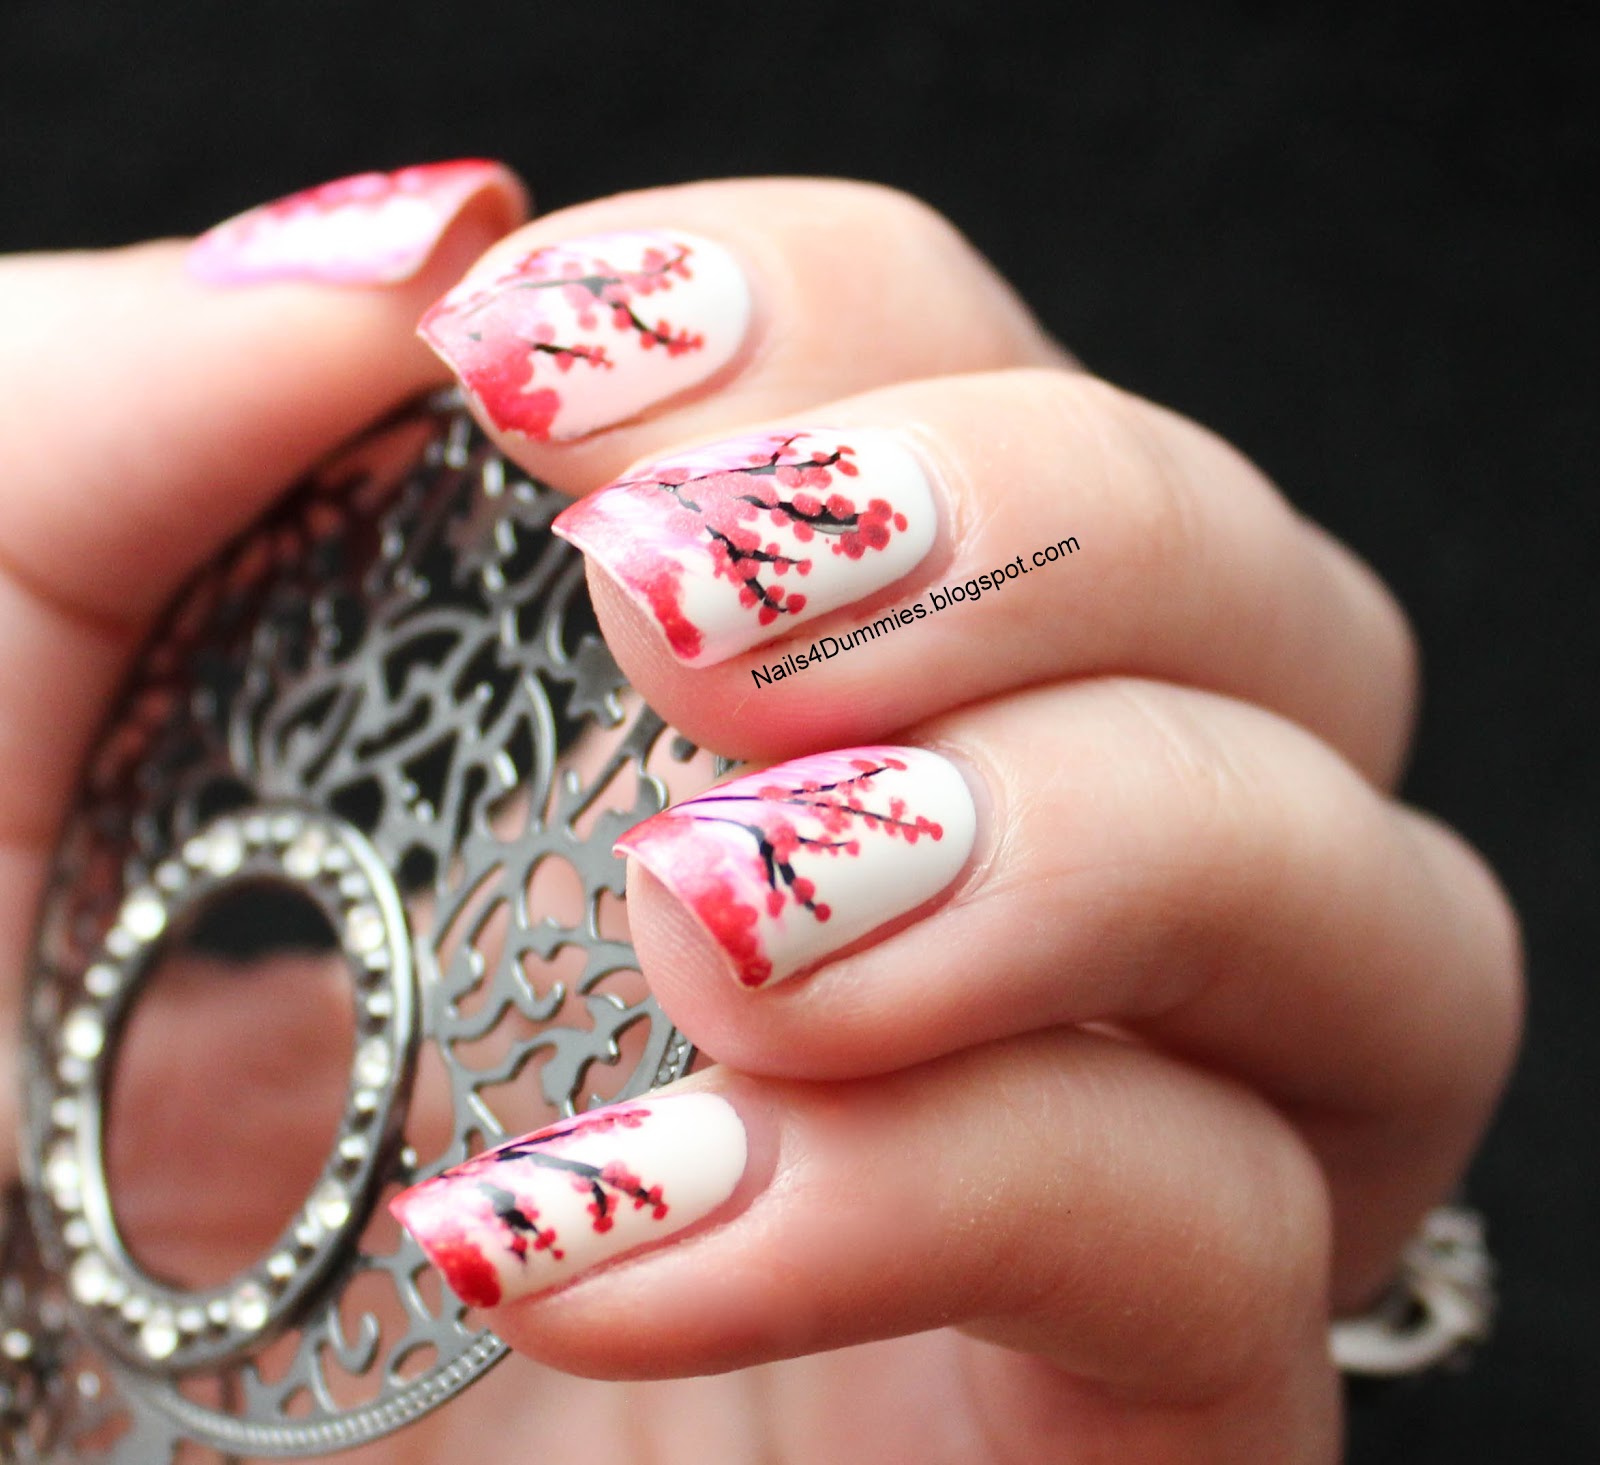 Nails 4 Dummies!: Cherry Blossom Nails